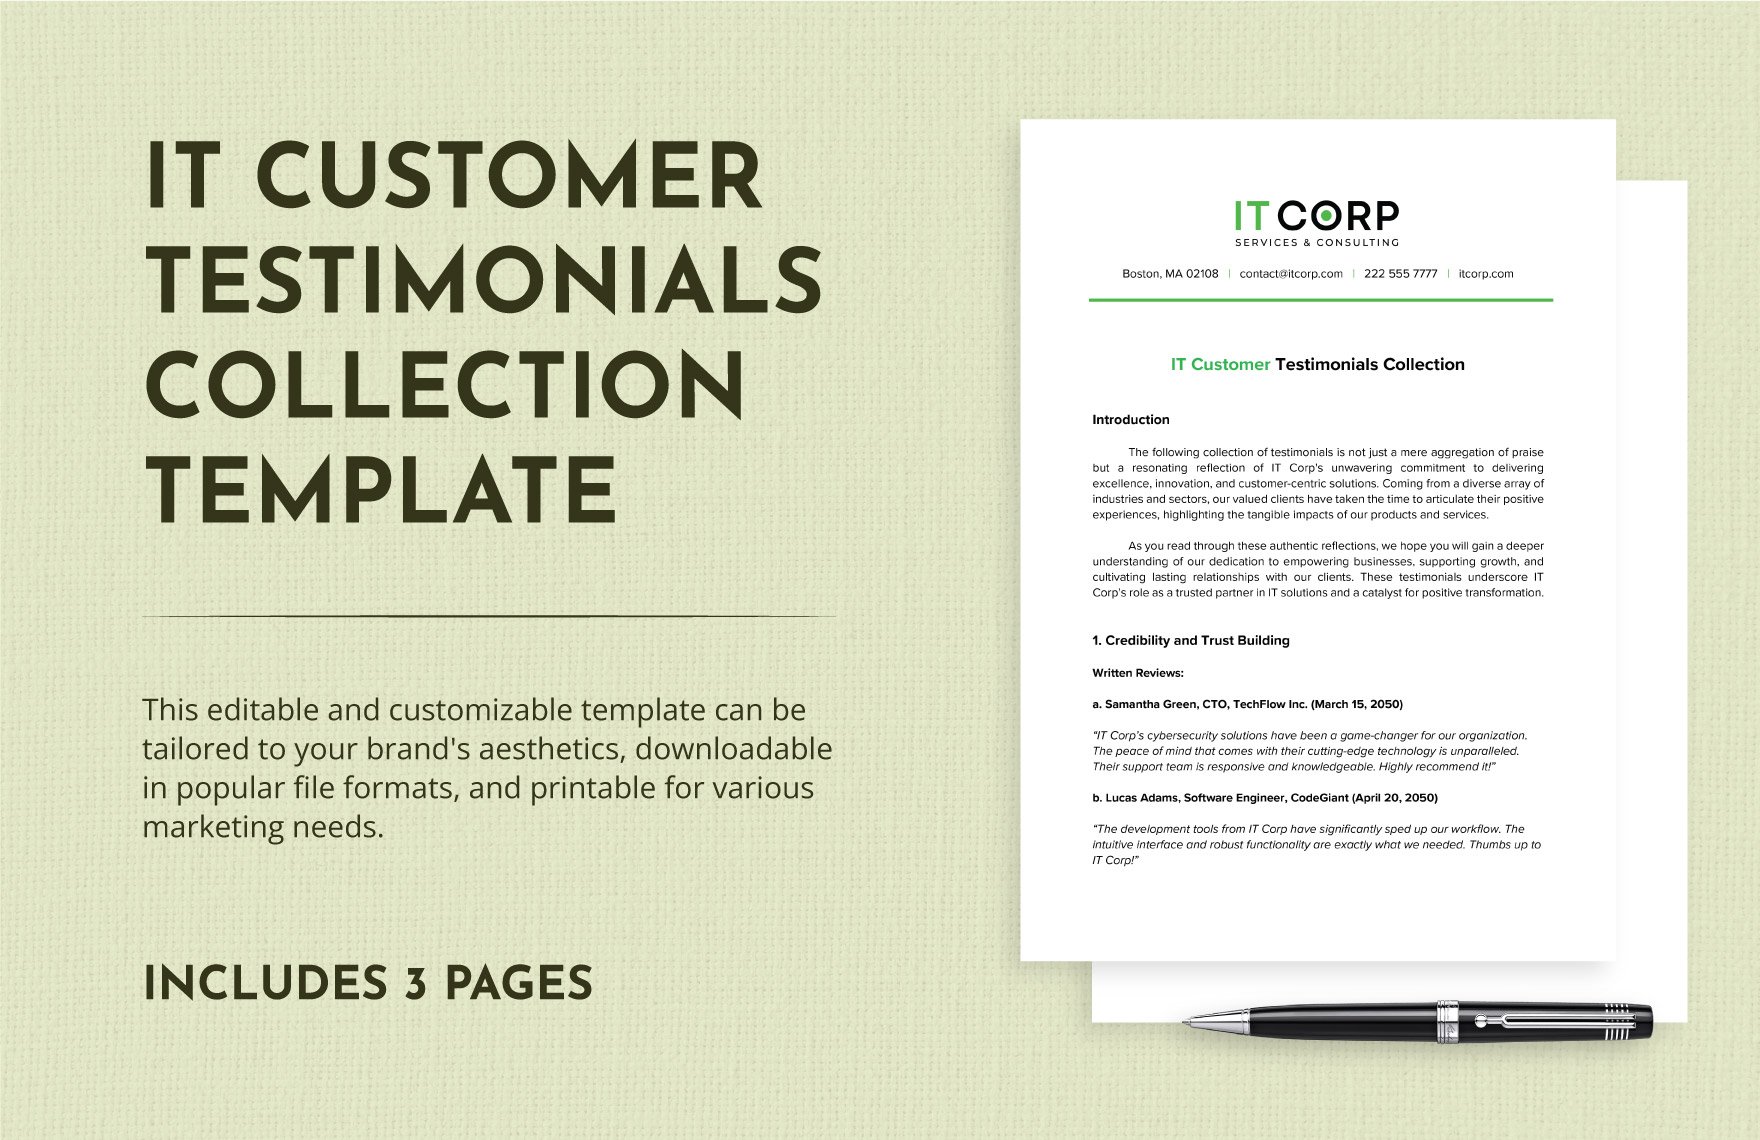 IT Customer Testimonials Collection Template